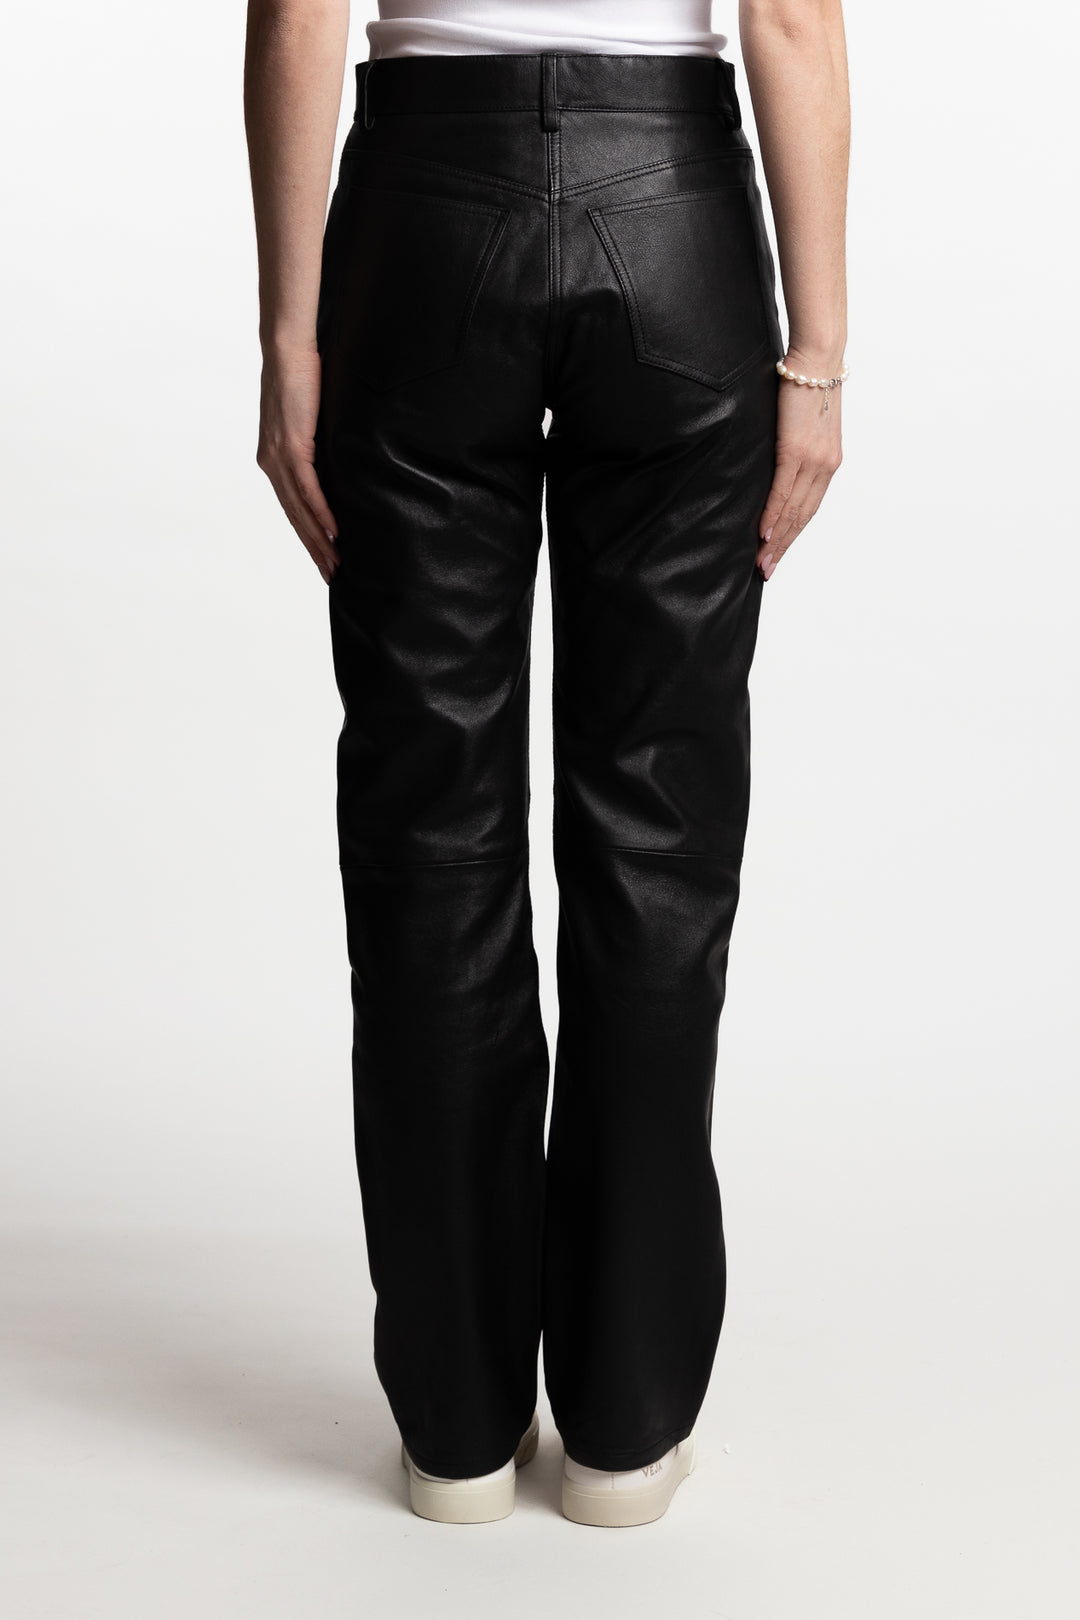 Salynn Trousers 15092- Black